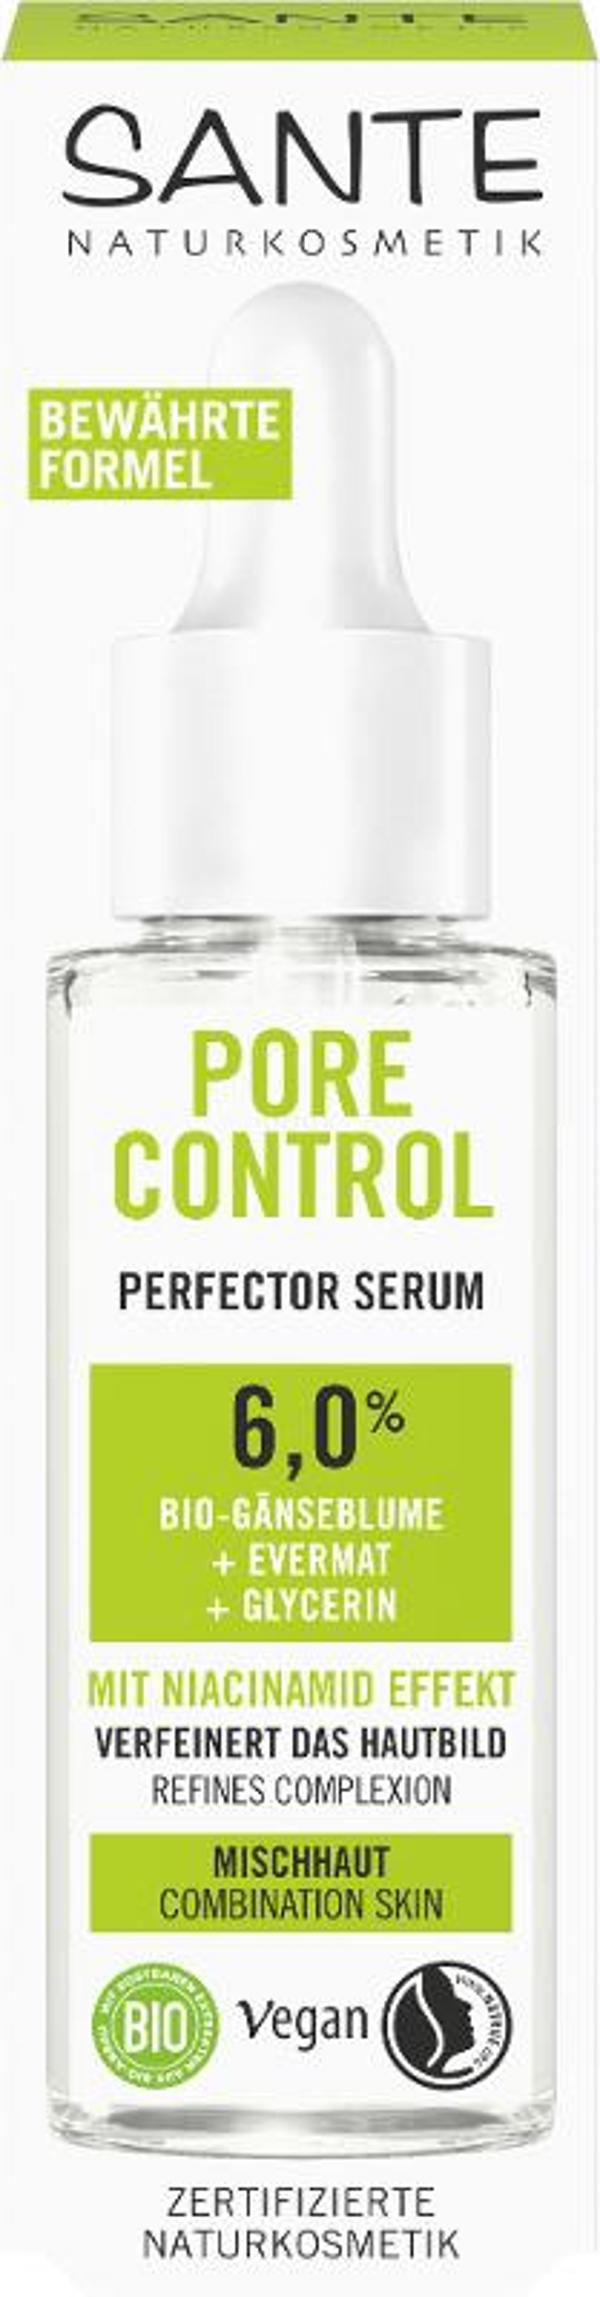 Produktfoto zu Pore Control Perfector Serum 30ml